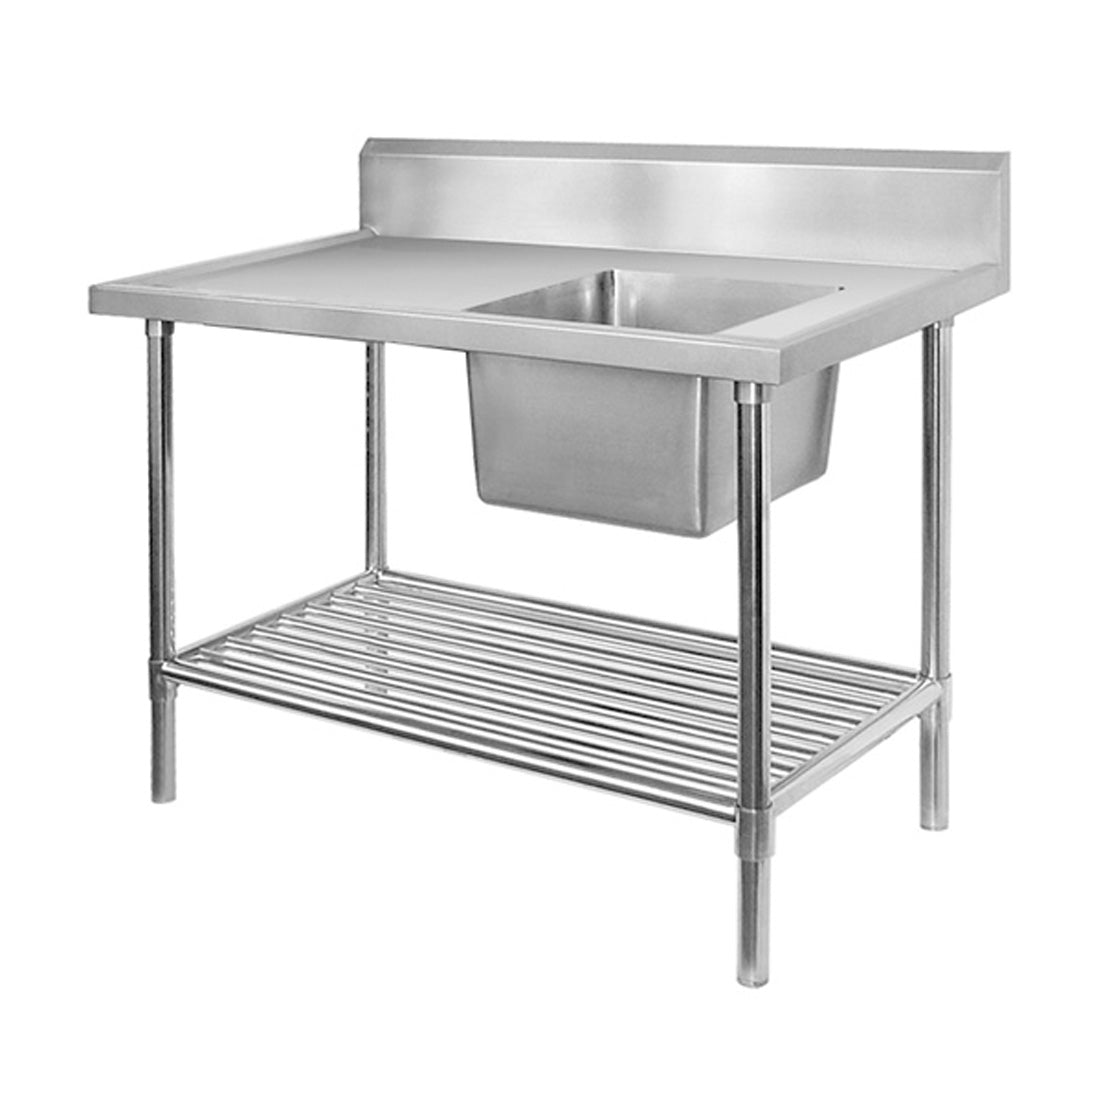 Modular Systems Single Right Sink Bench with Pot Undershelf 1500x700x900 SSB7-1500R/A